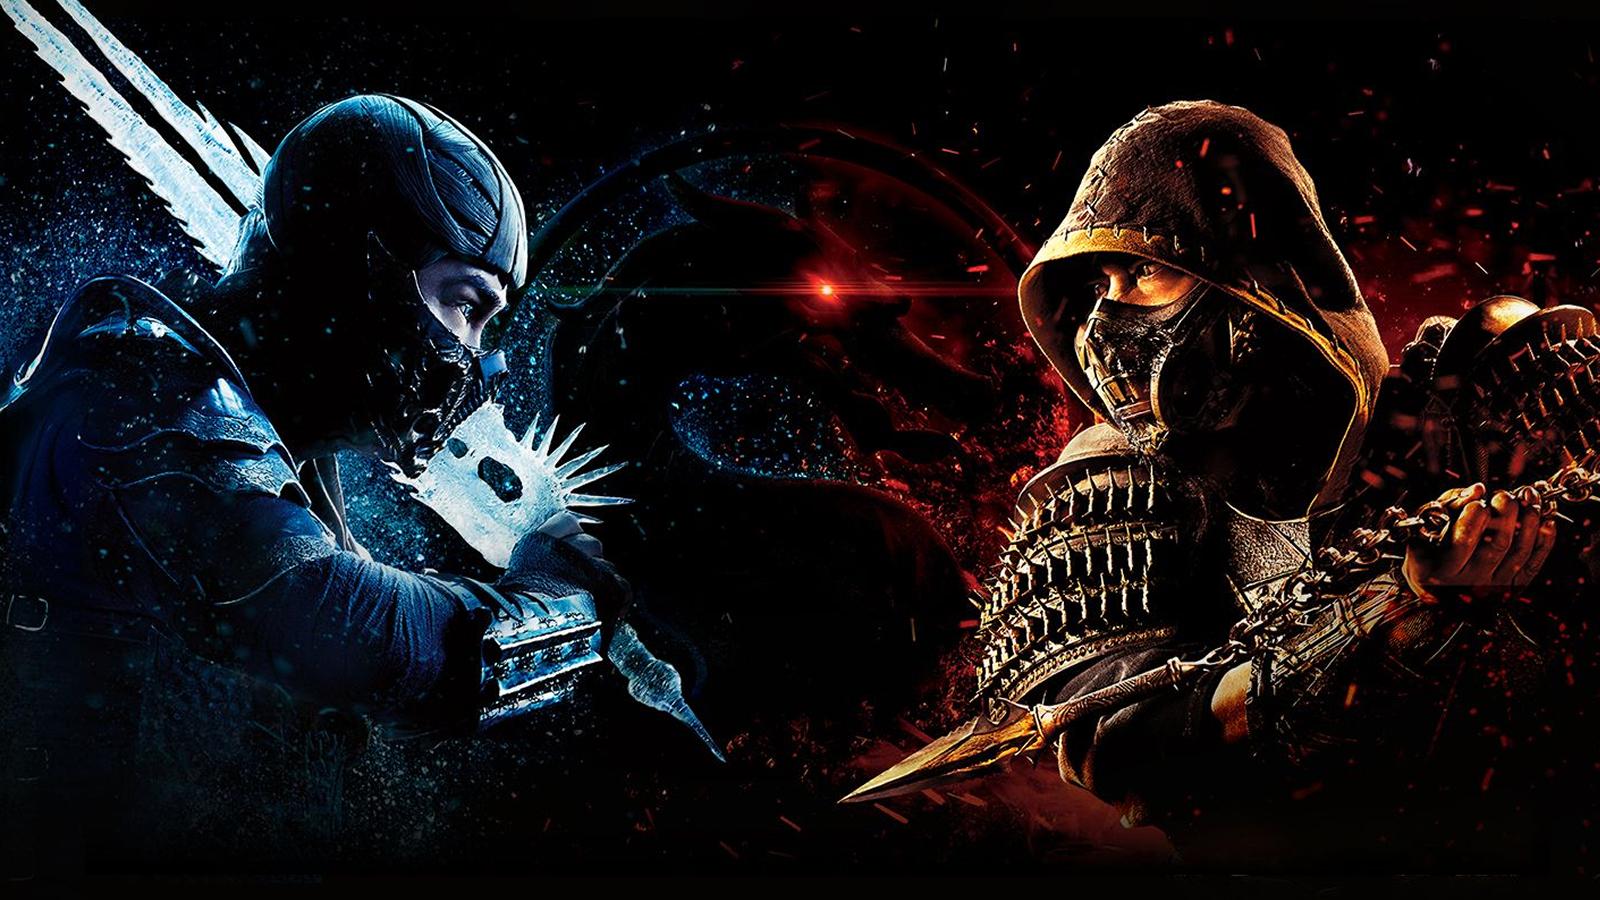 Sub-Zero and Scorpion in Mortal Kombat.